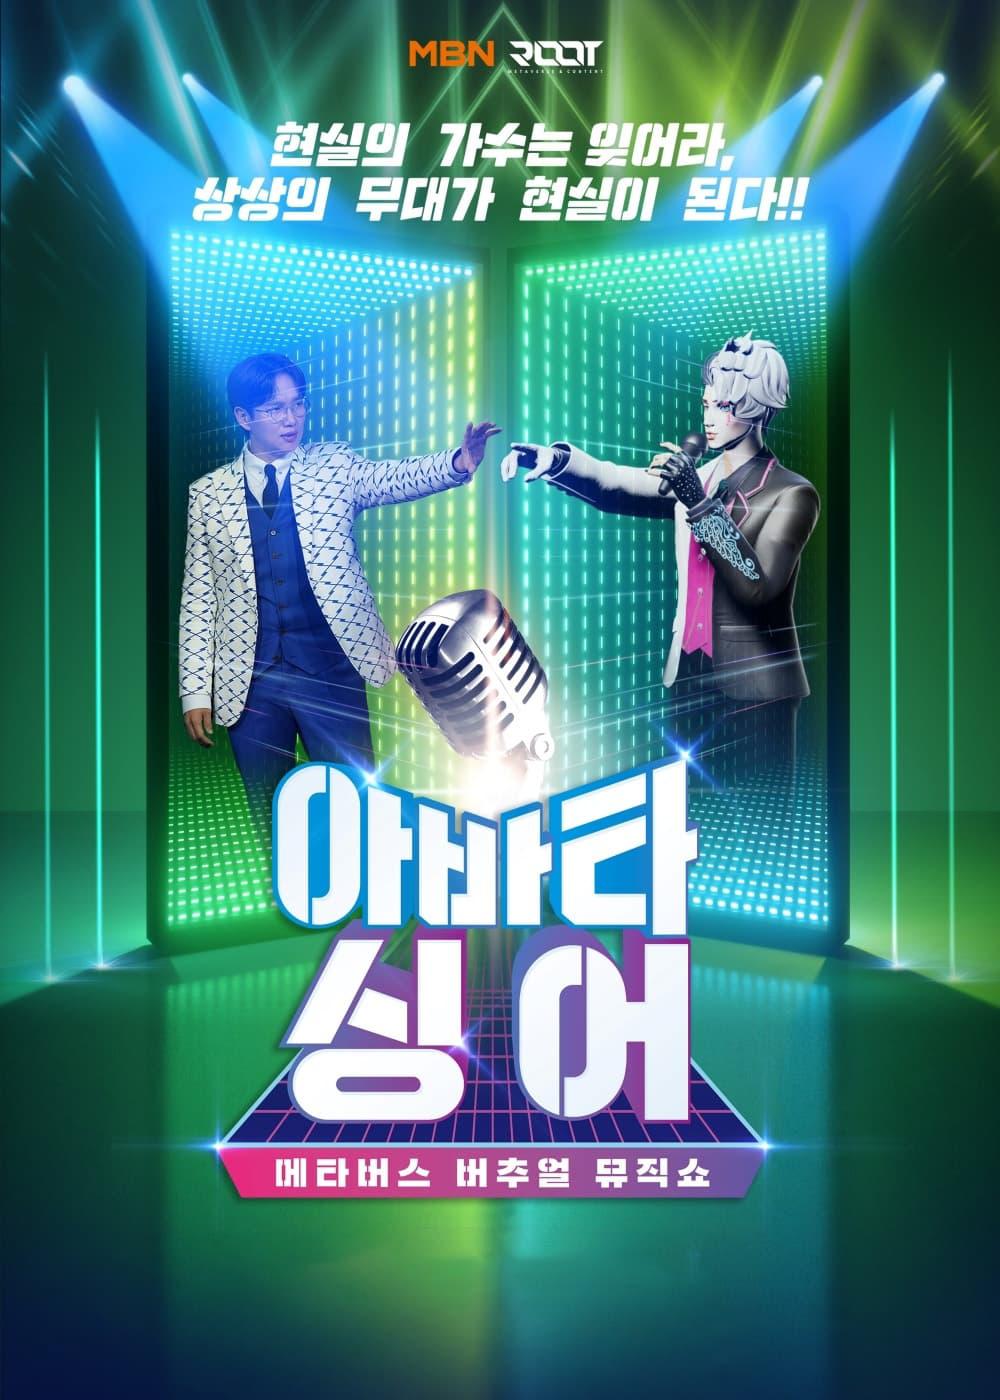 TV ratings for Avatar Singer (아바타싱어) in South Korea. MBN TV series